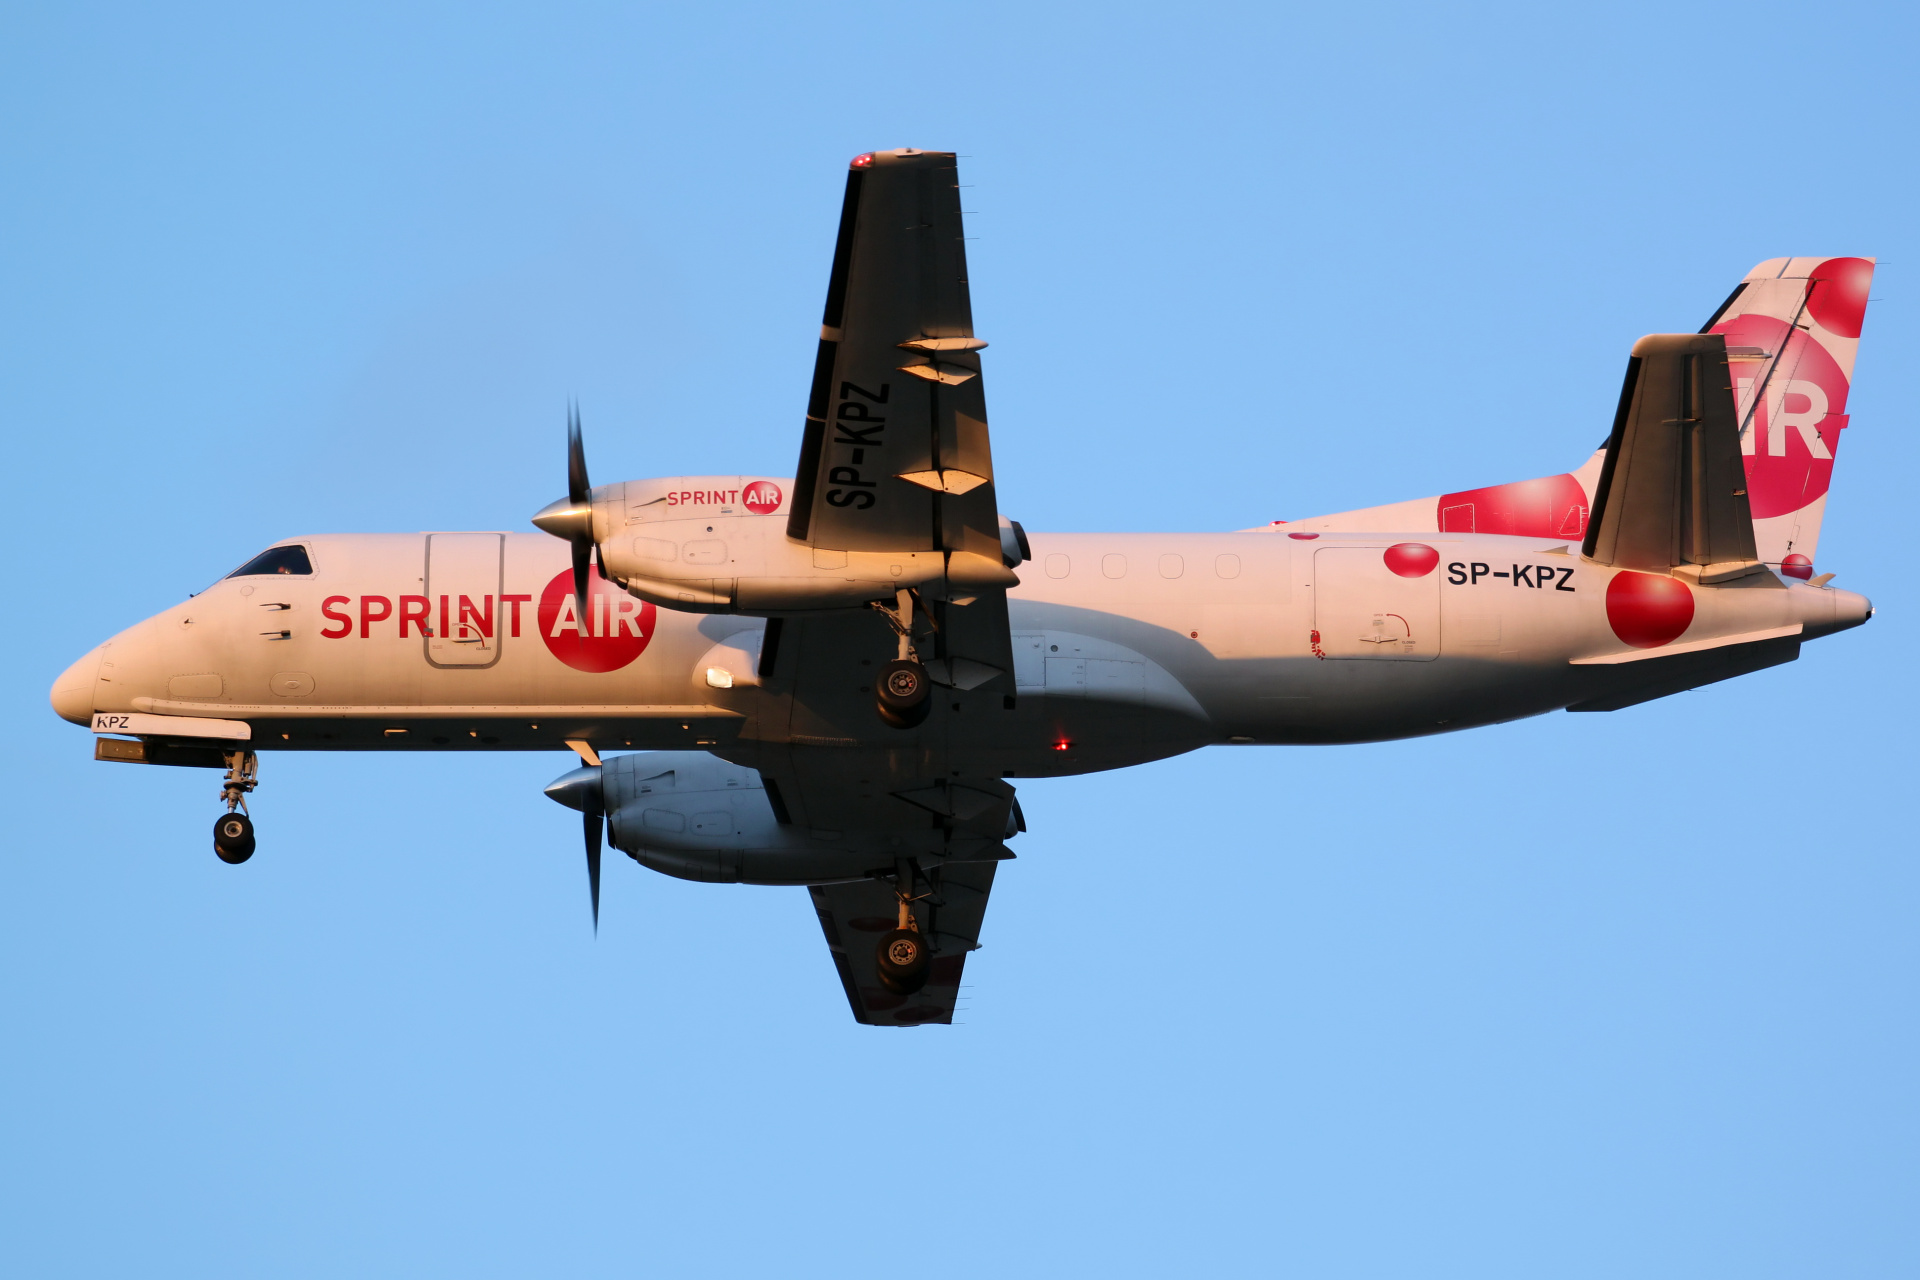 340AF, SP-KPZ (Aircraft » EPWA Spotting » Saab 340 » 340A » SprintAir)